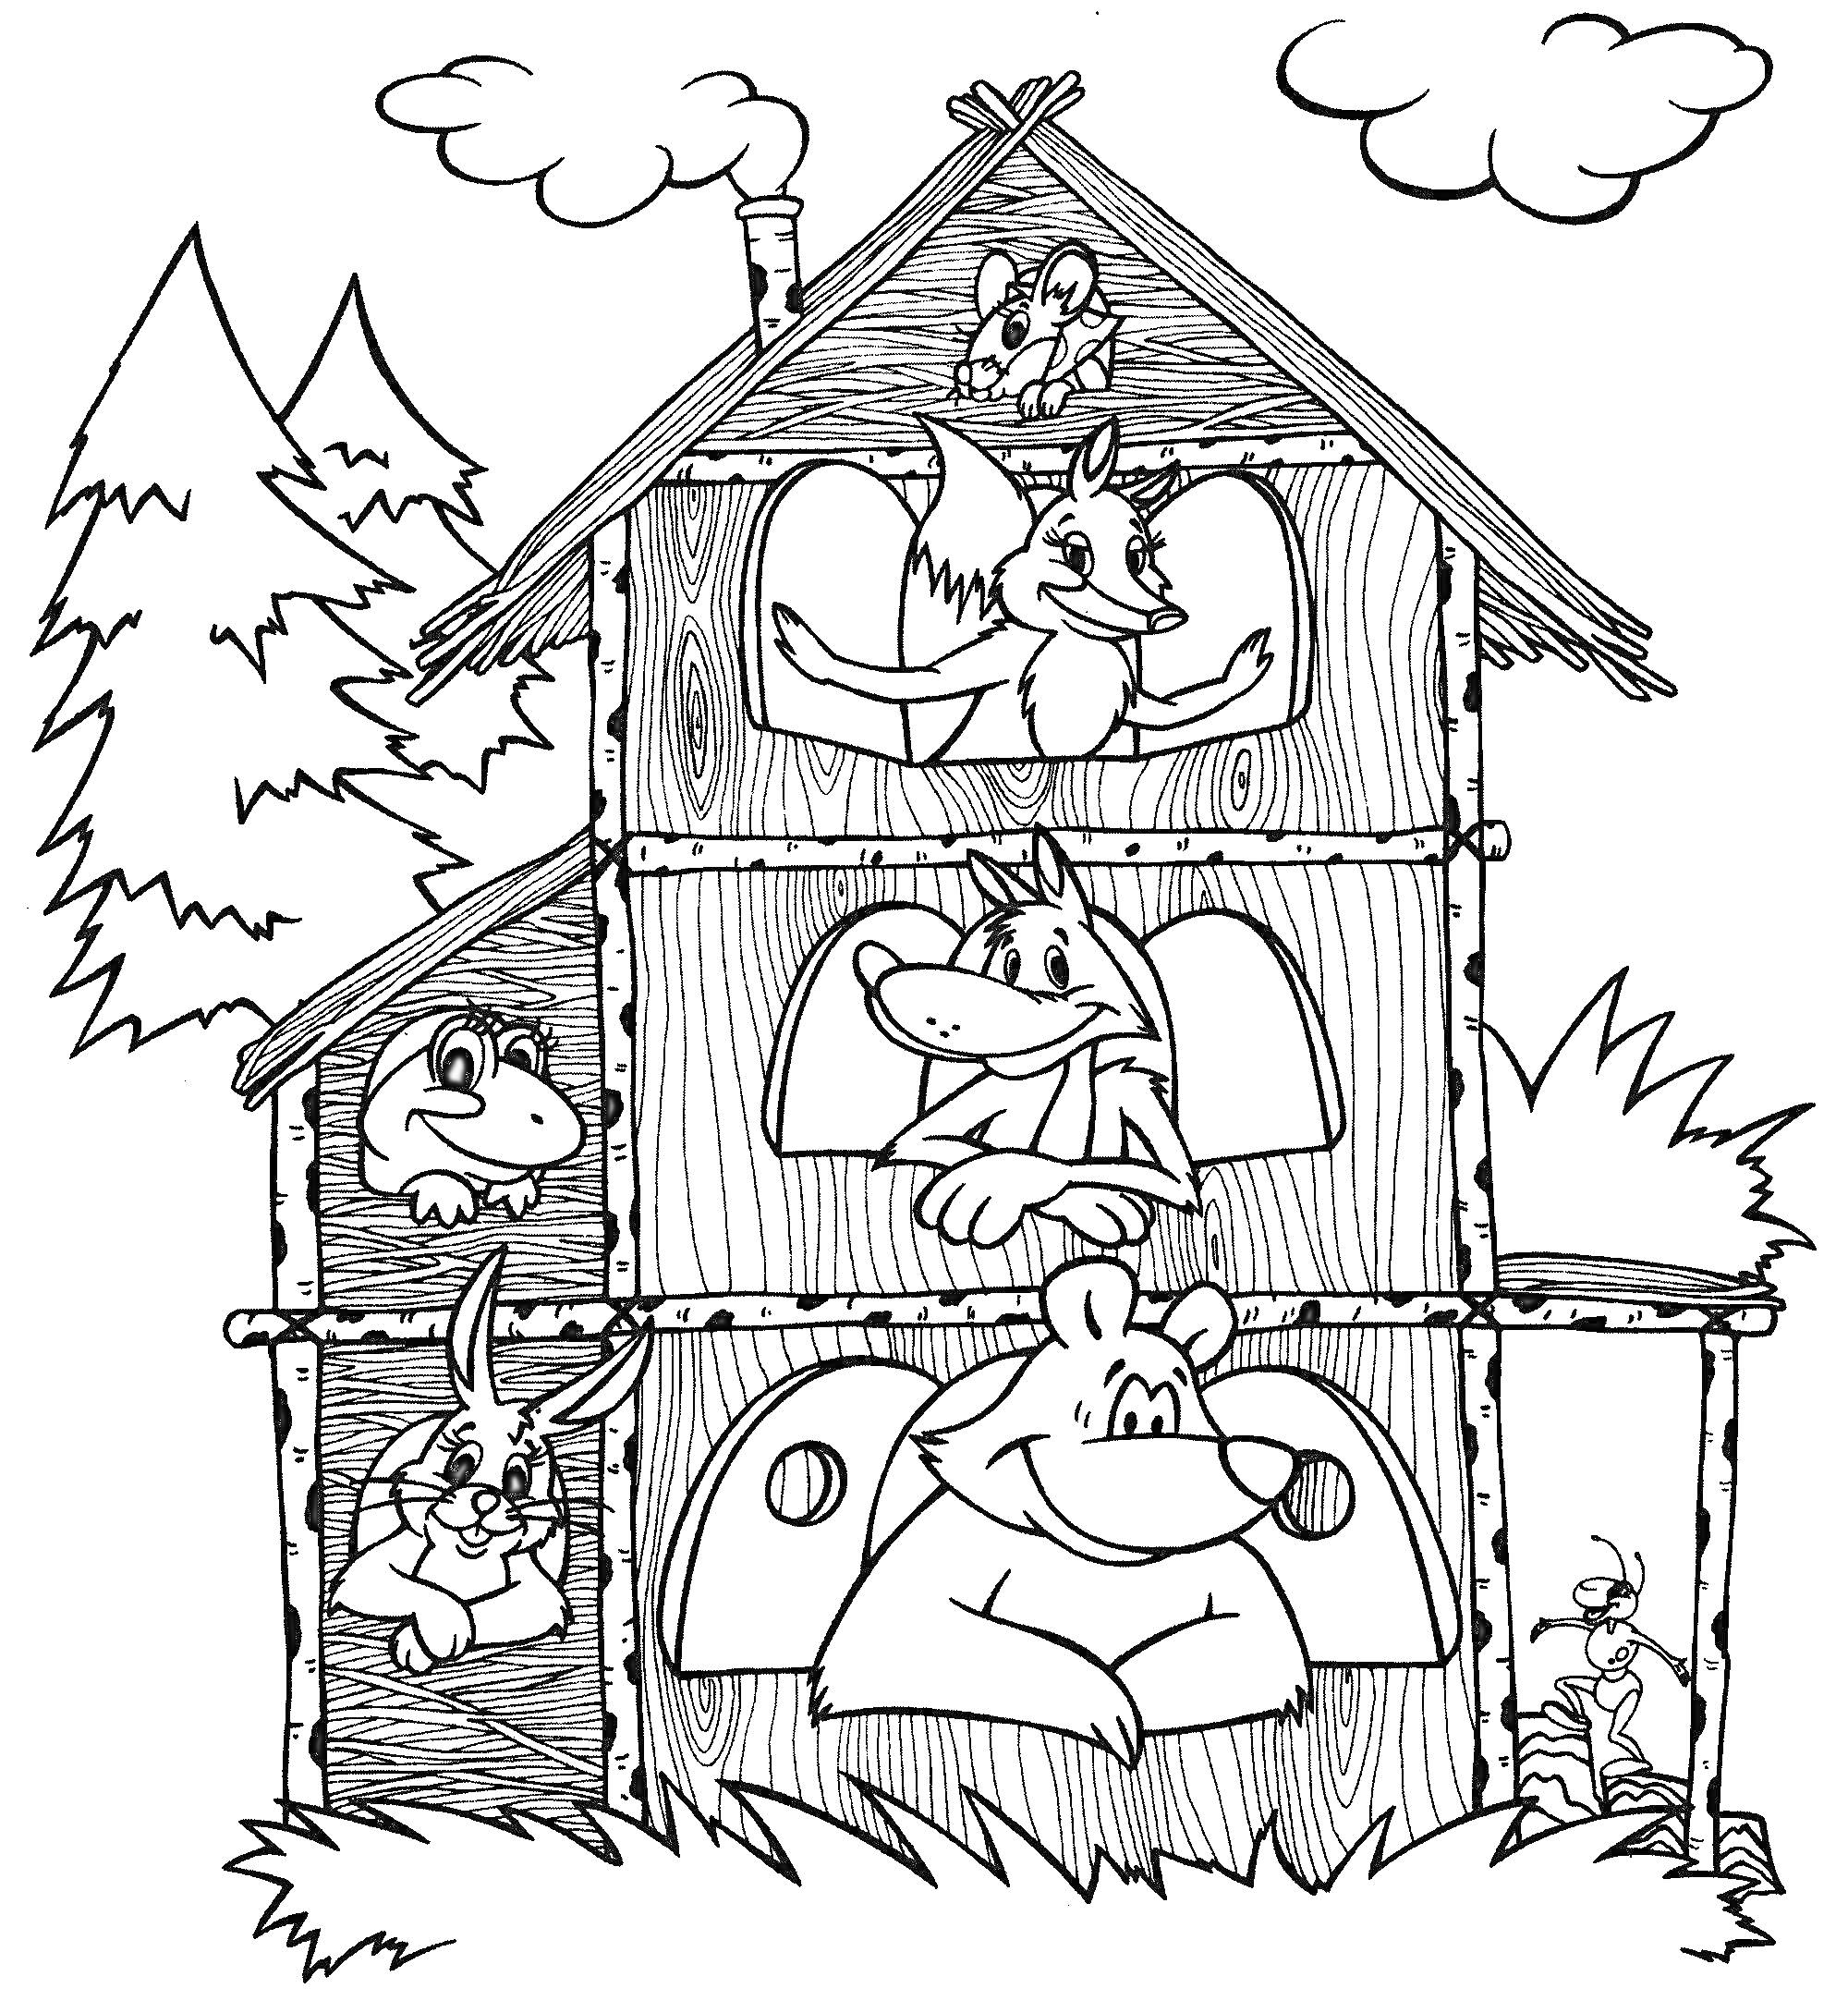 Раскраска Теремок с животными: лиса на крыше, лягушка в окне слева, волк в окне справа, заяц в окне слева под лягушкой, мишка на дверях, мышка у двери